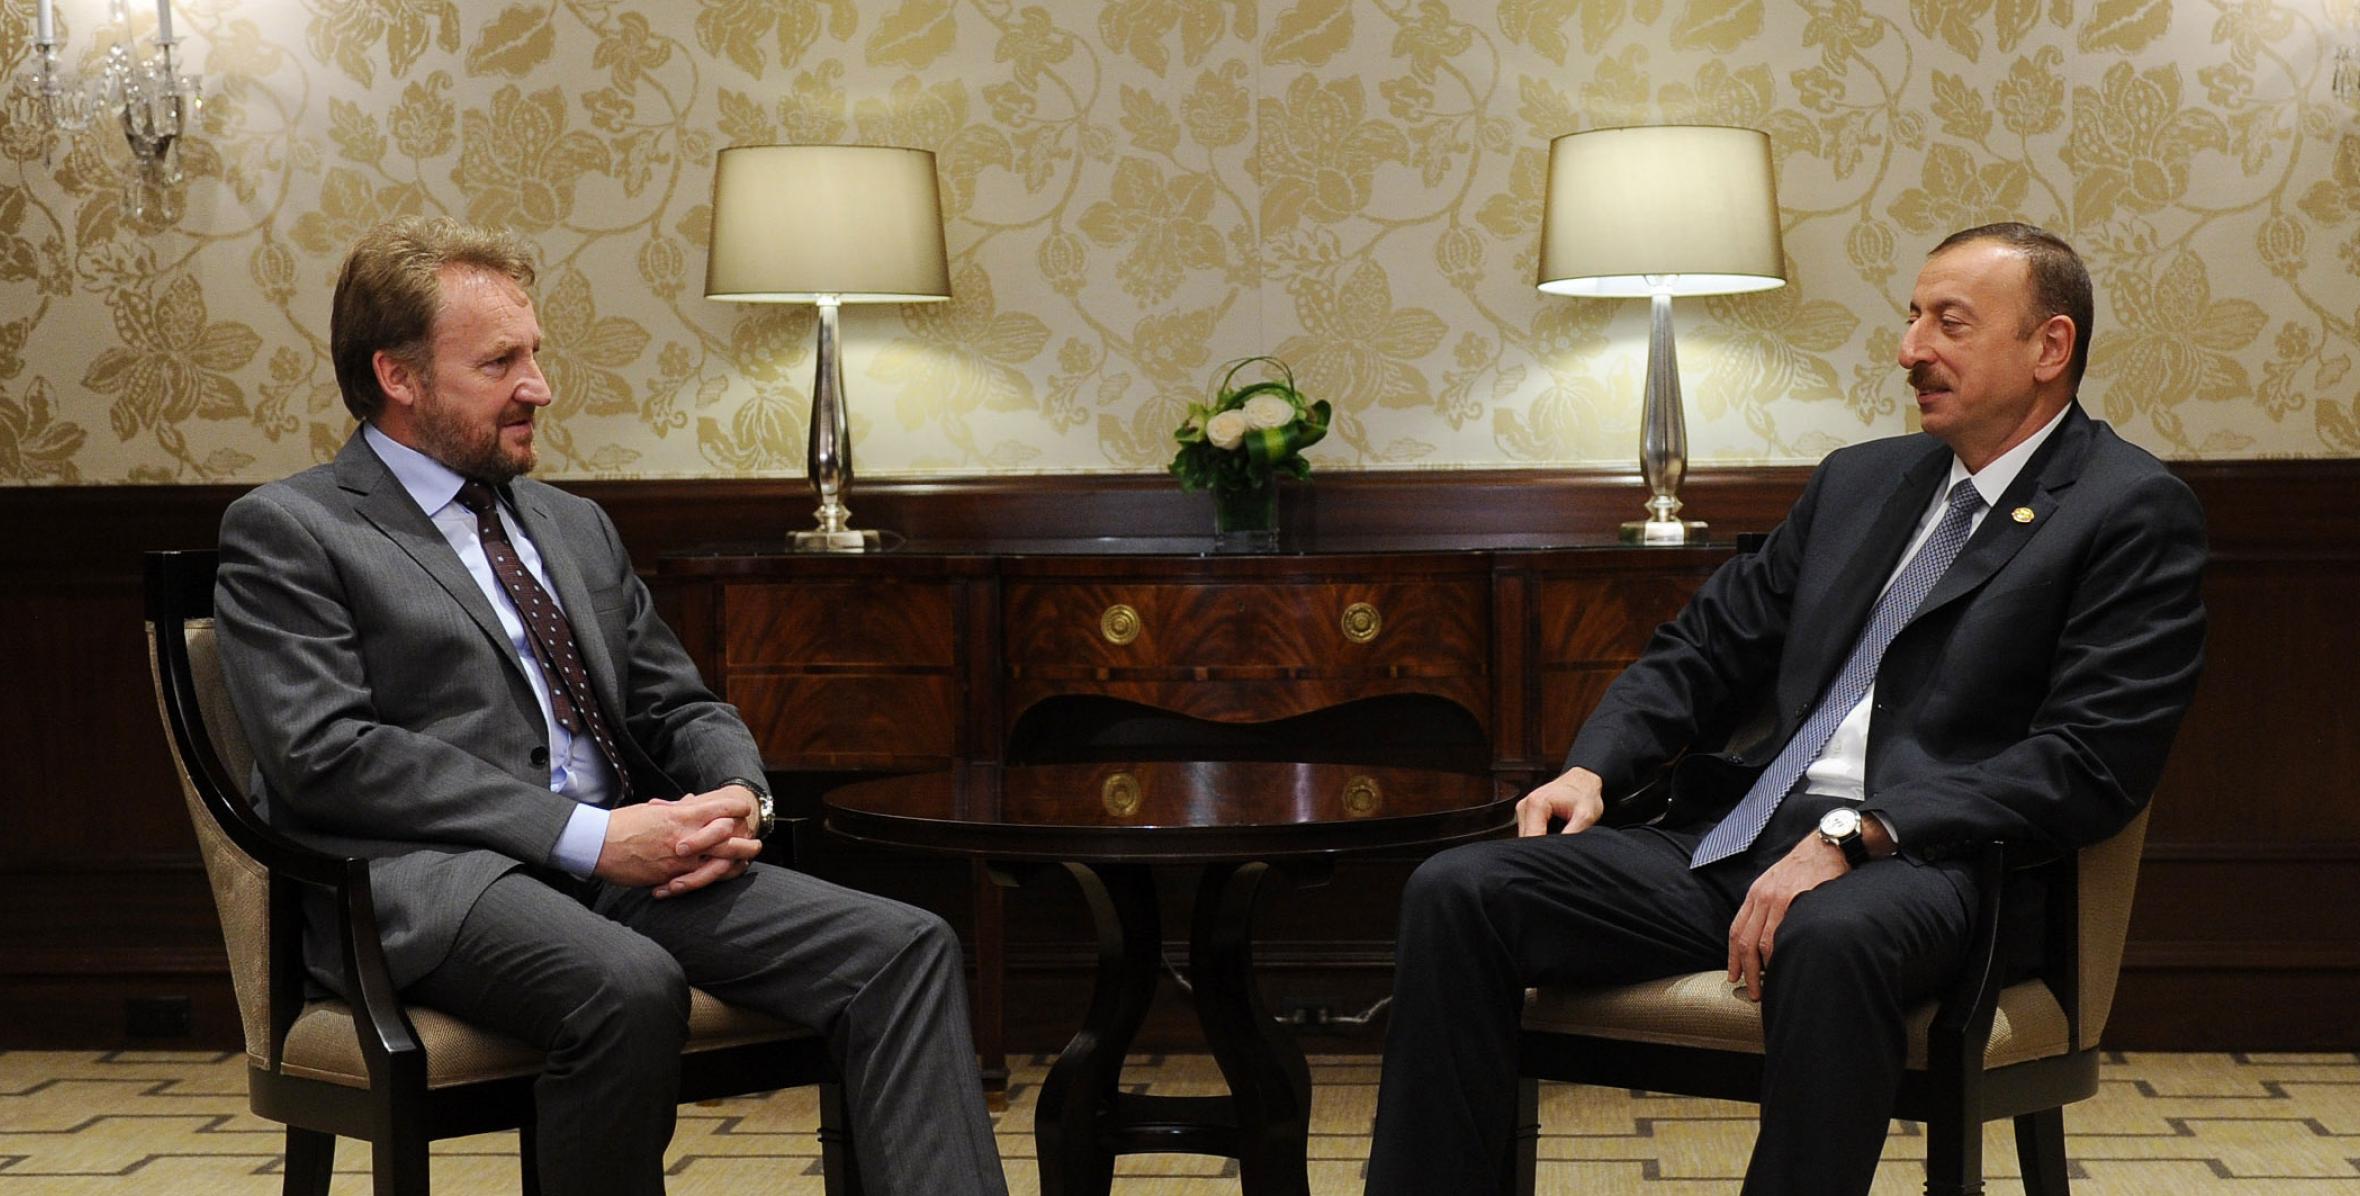 Ilham Aliyev met with Chairman of the Presidency of Bosnia and Herzegovina Bakir Izetbegovic in Chicago